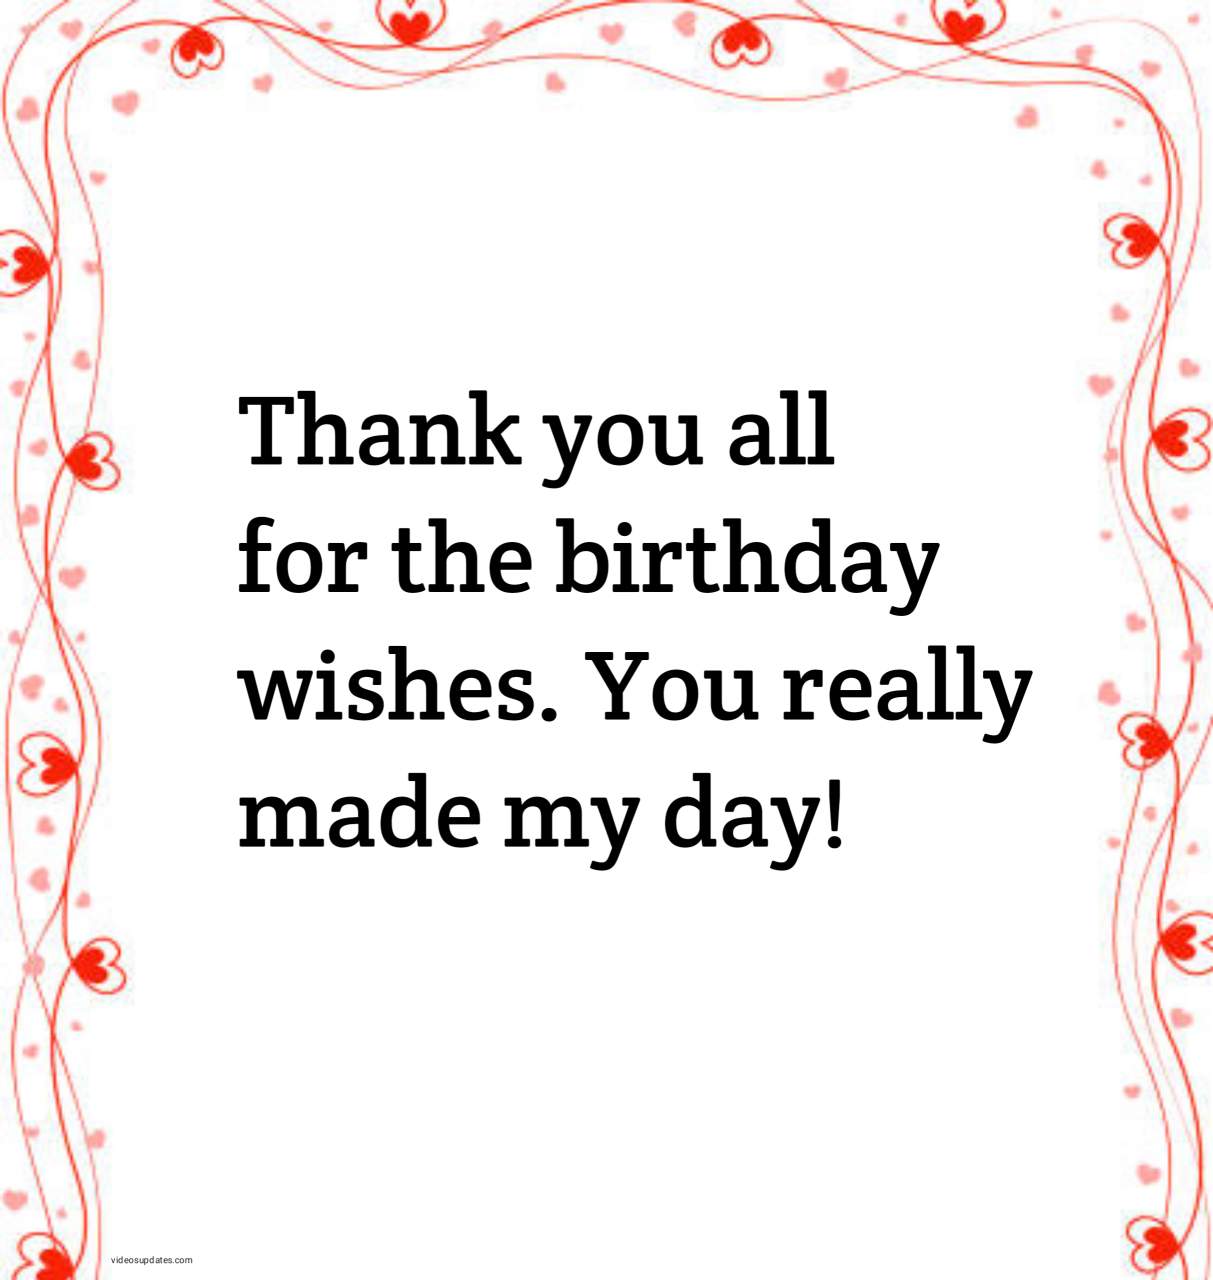 https://videosupdates.com/birthday-wishes-thanks-reply/